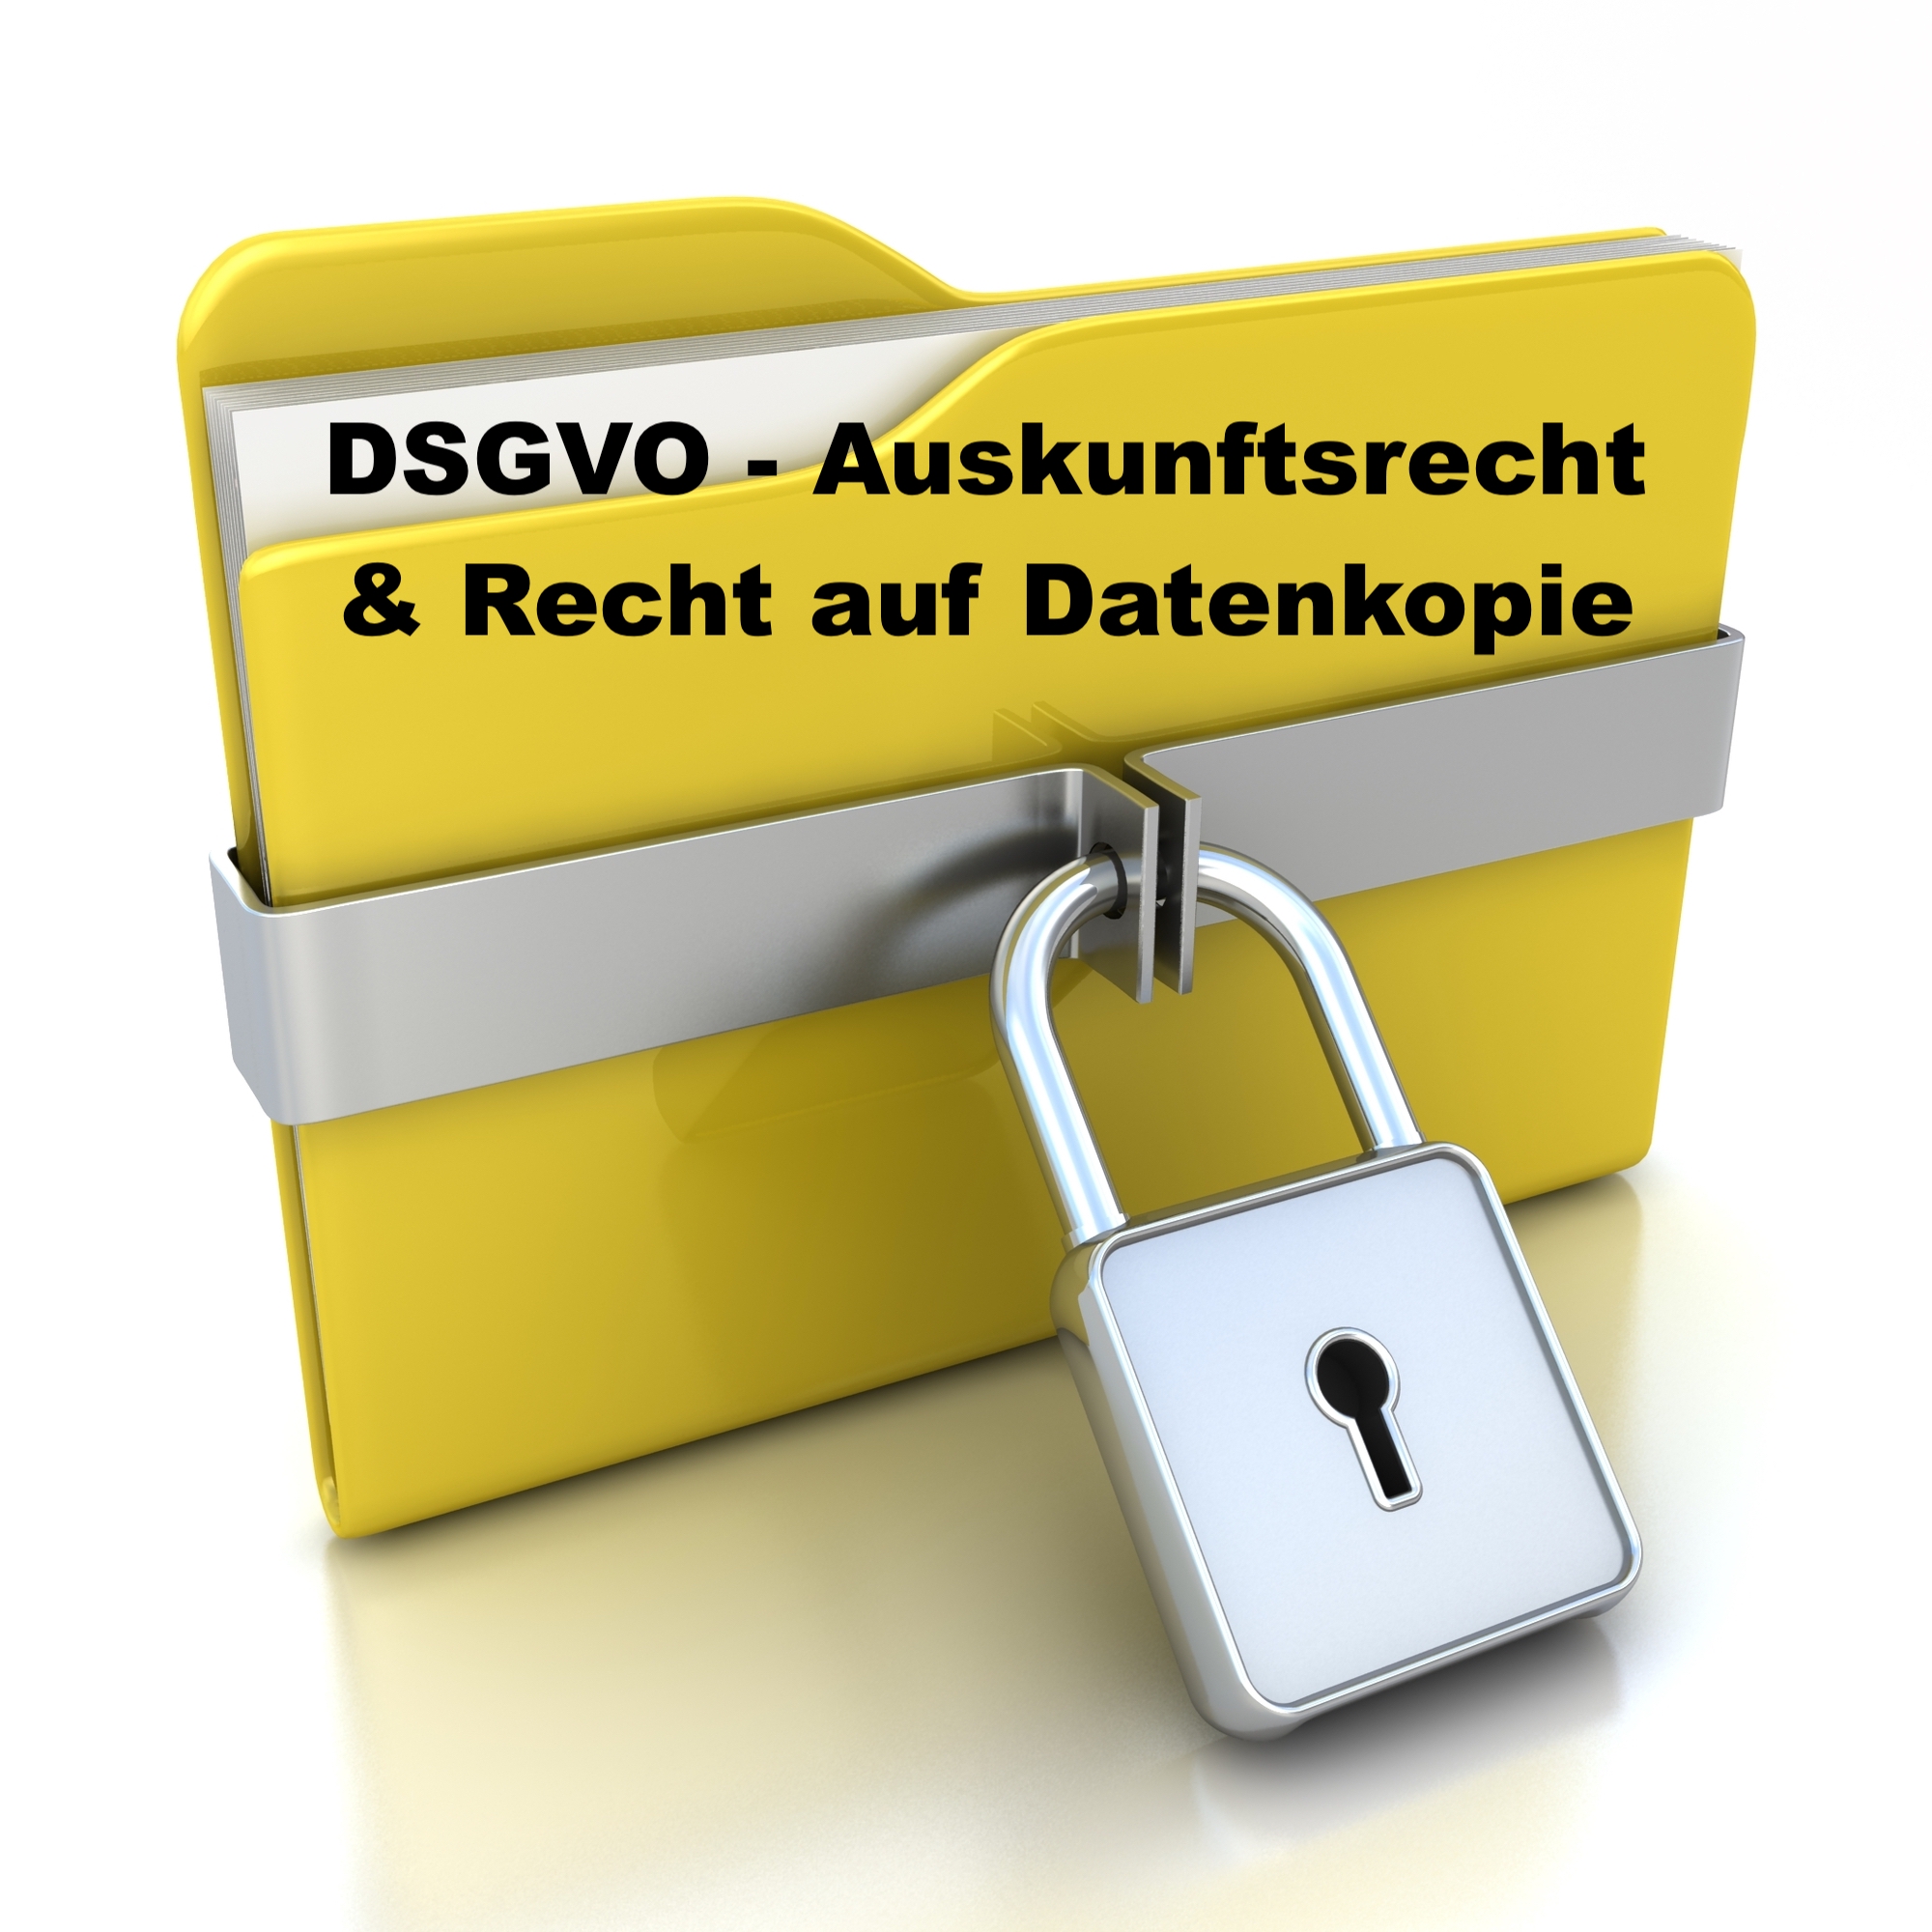 DSGVO Auskunftsrecht auf Datenkopie